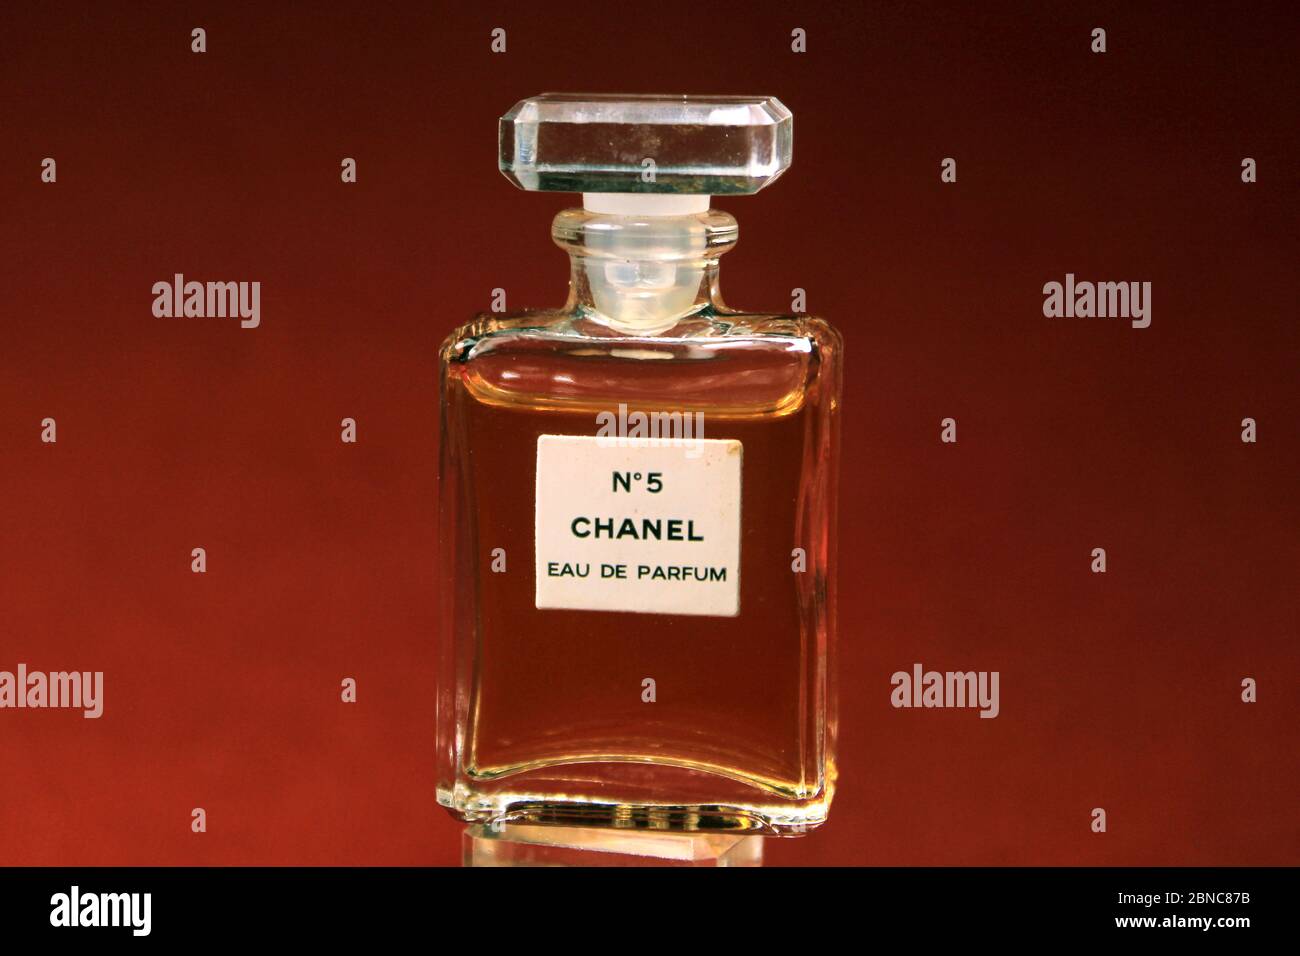 Lalique Doves Nina Ricci l'Air Du Temps Factice Display Perfume Bottle